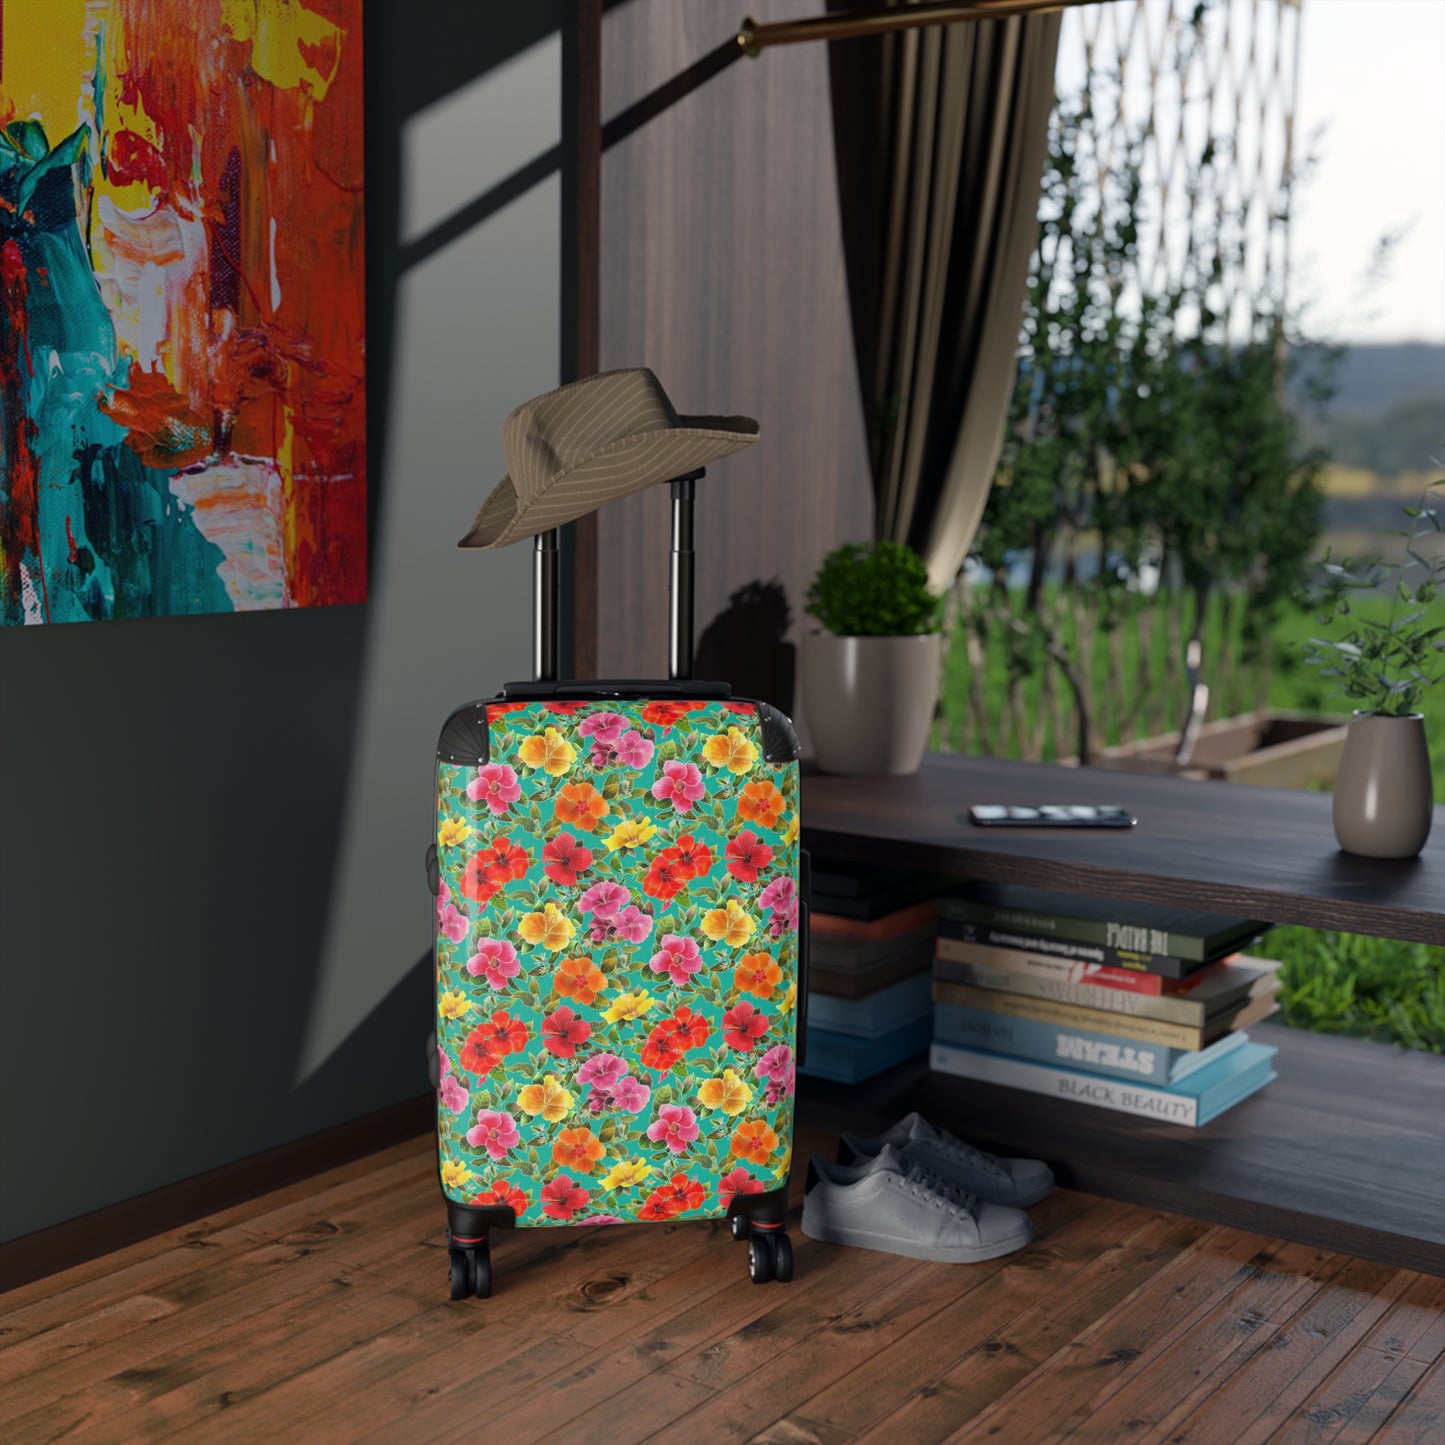 Hibiscus Garden Hardside Spinner Suitcase